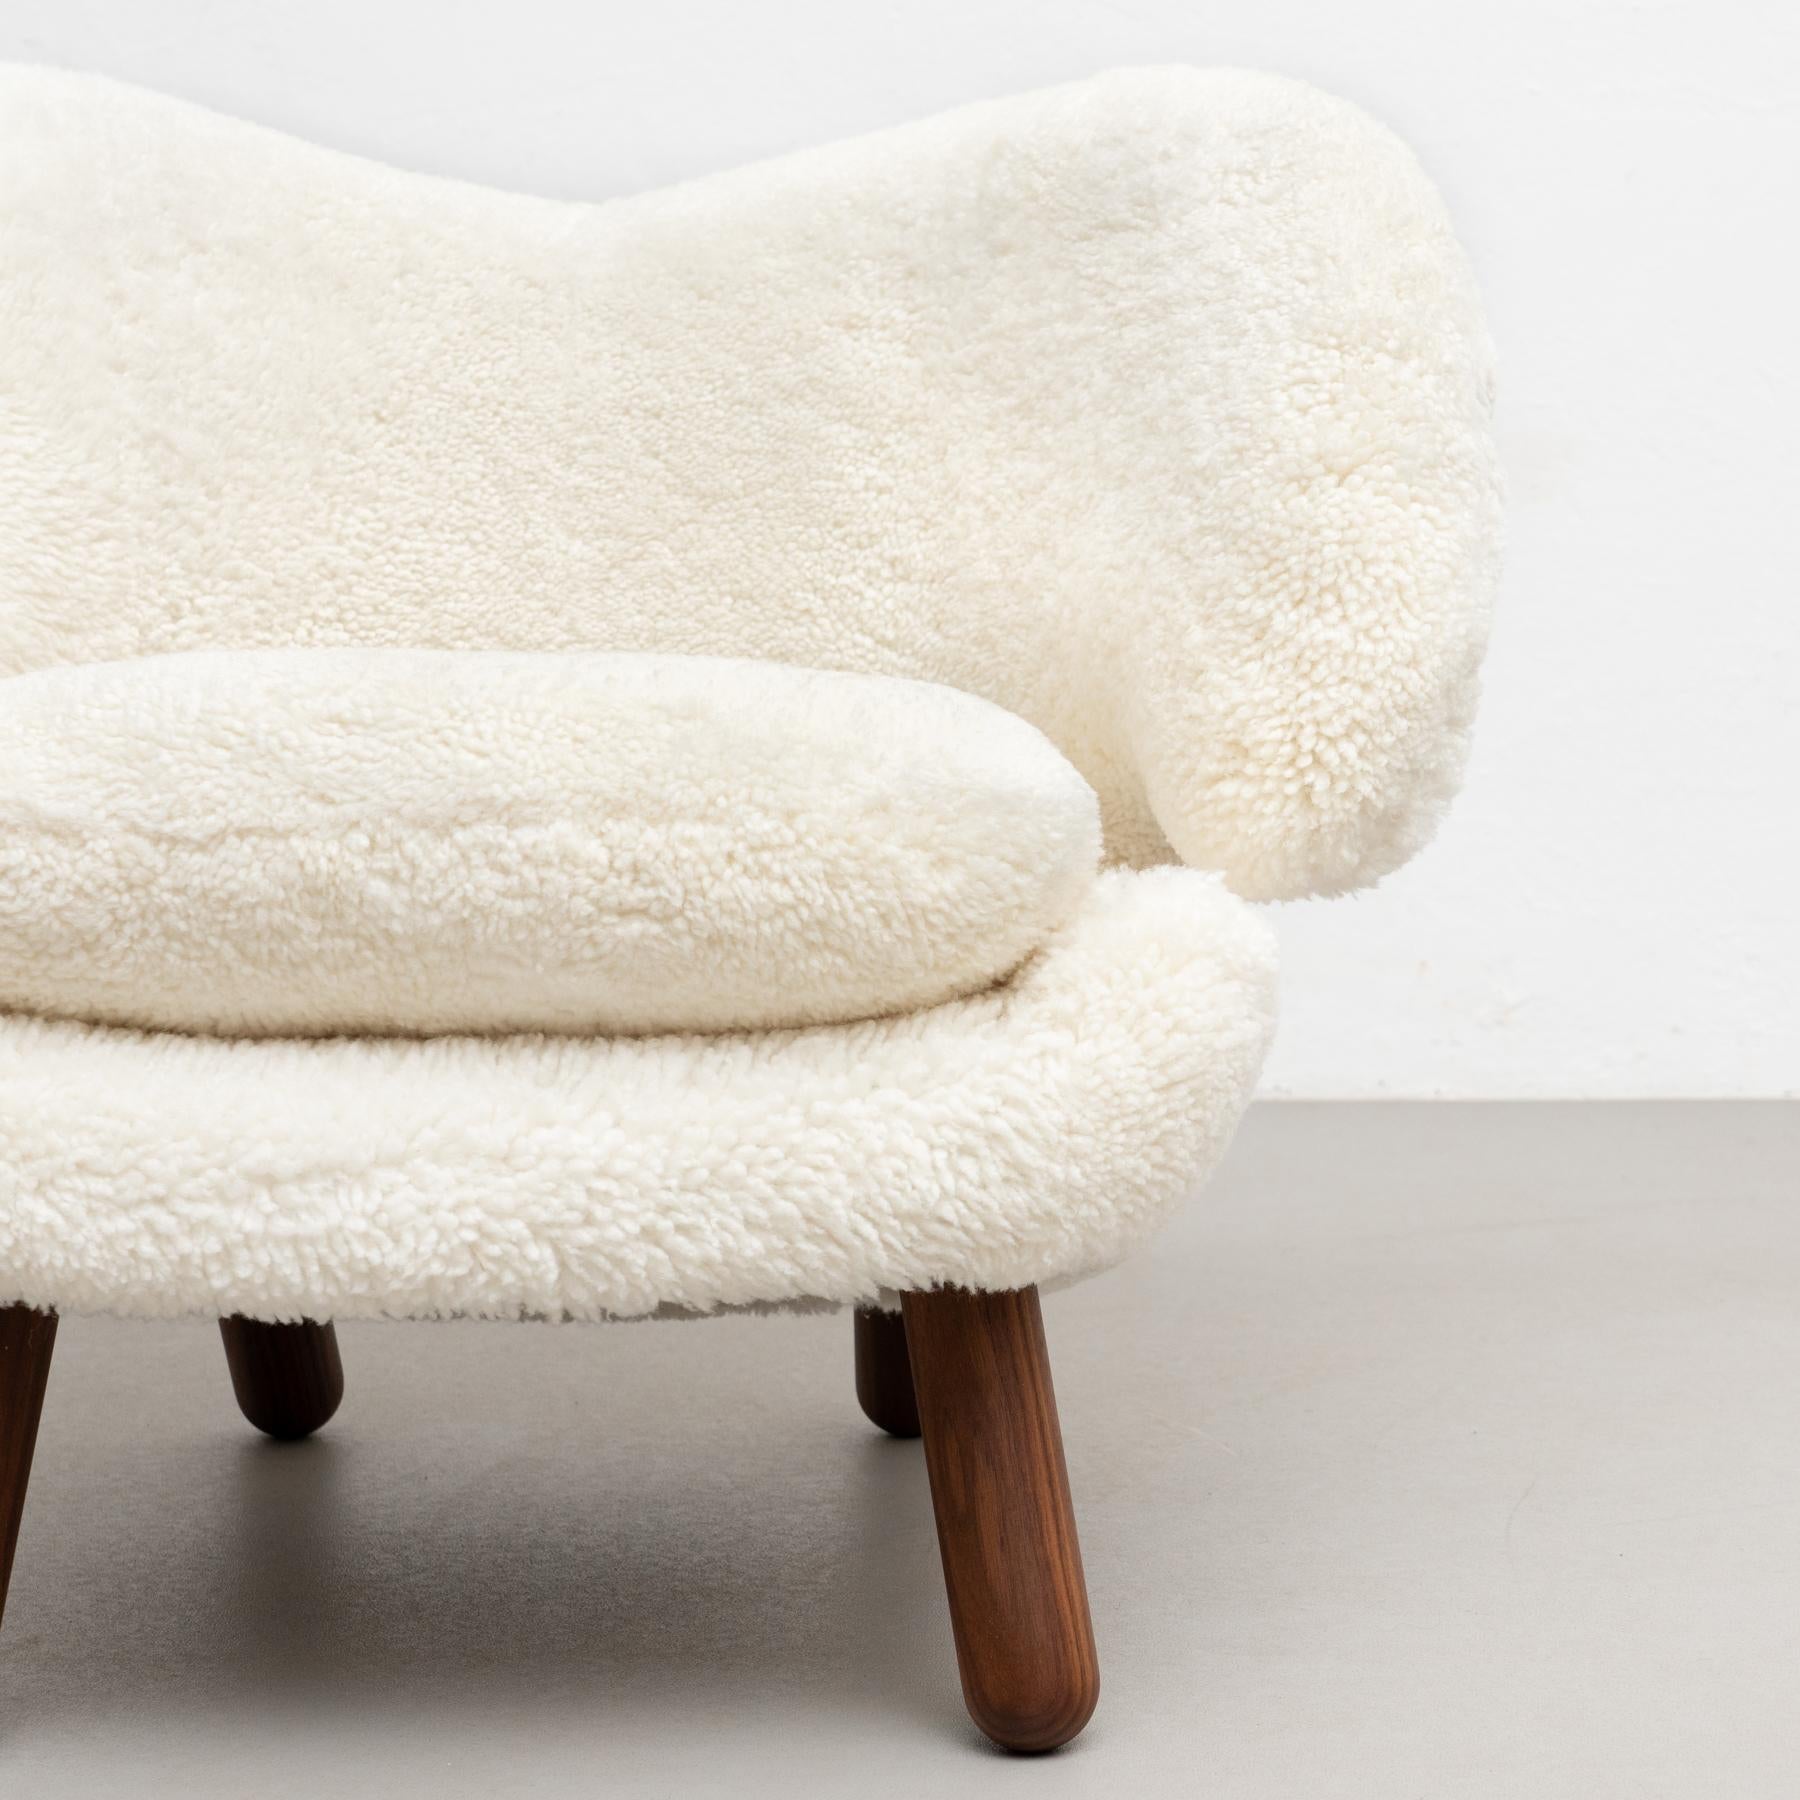 Finn Juhl Pelican Chair Upholstered in Offwhite Sheepskin (Chaise Pélican recouverte de peau de mouton blanc cassé) en vente 3